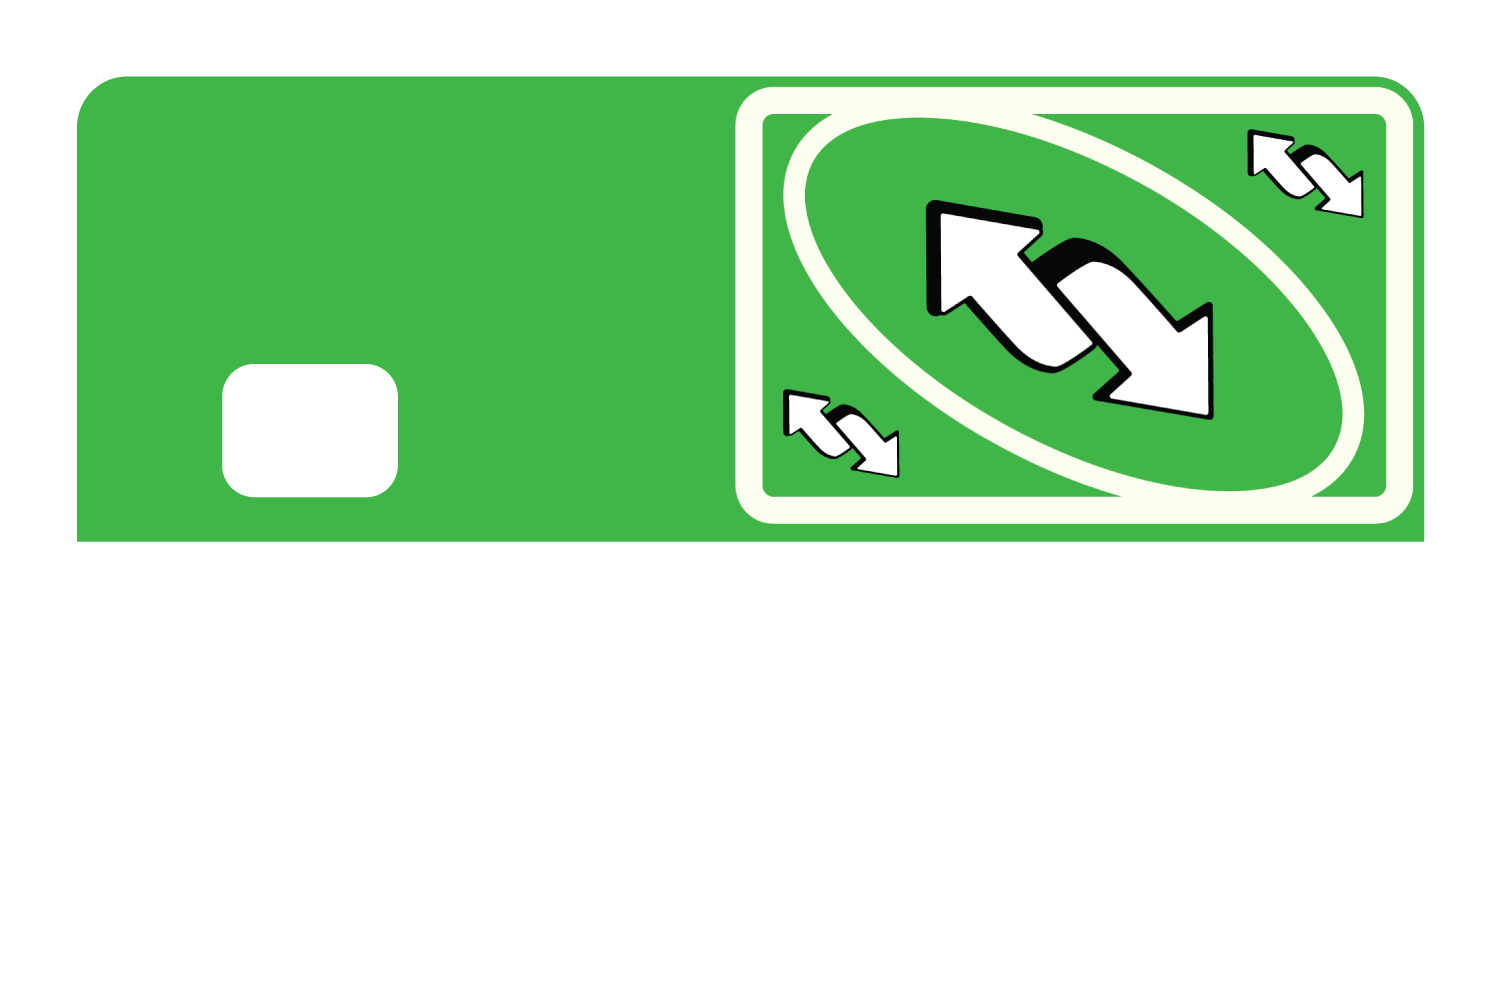 Reverse: Green